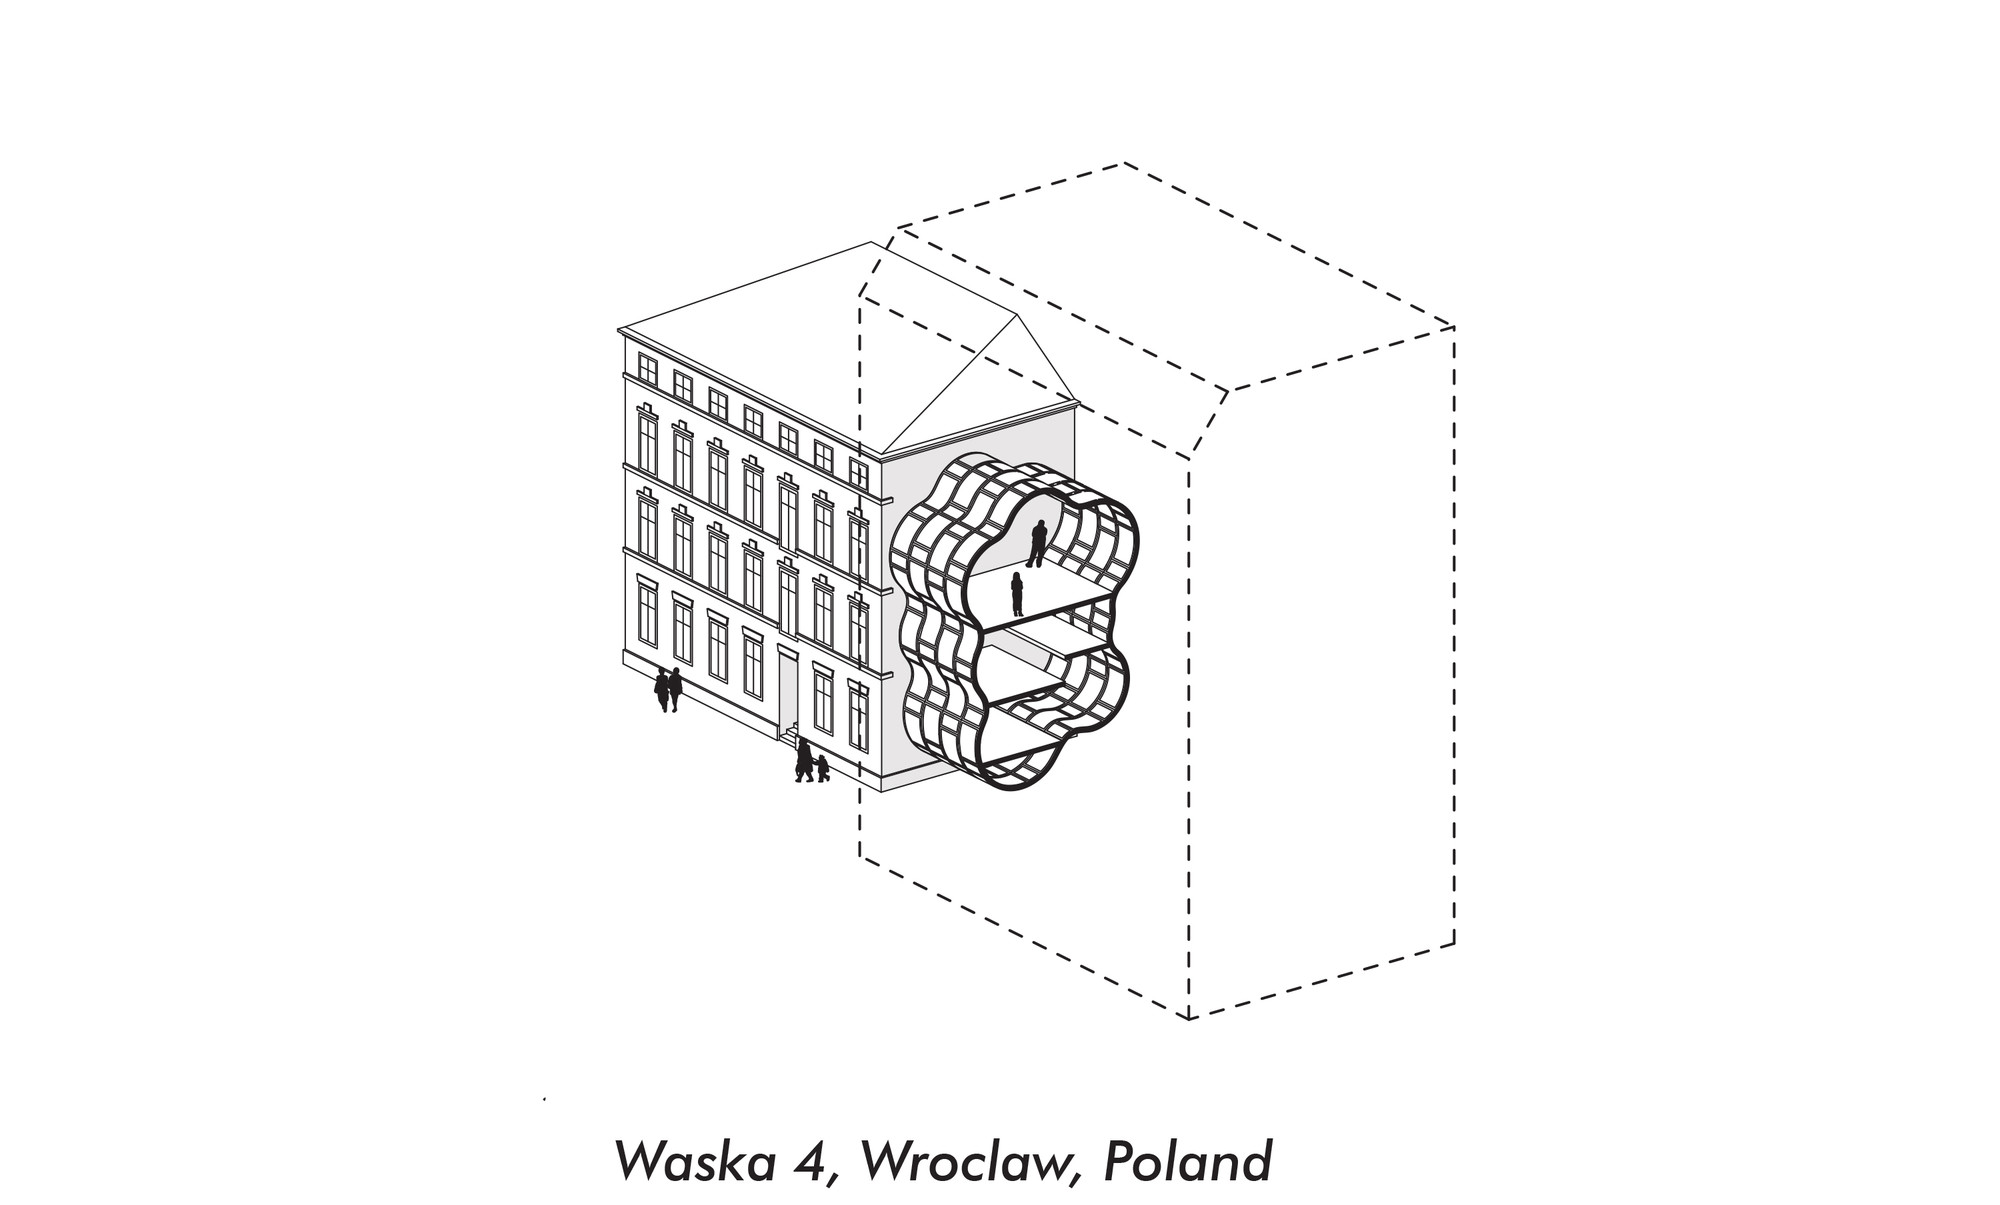 Live Between Buildings - Wroclaw